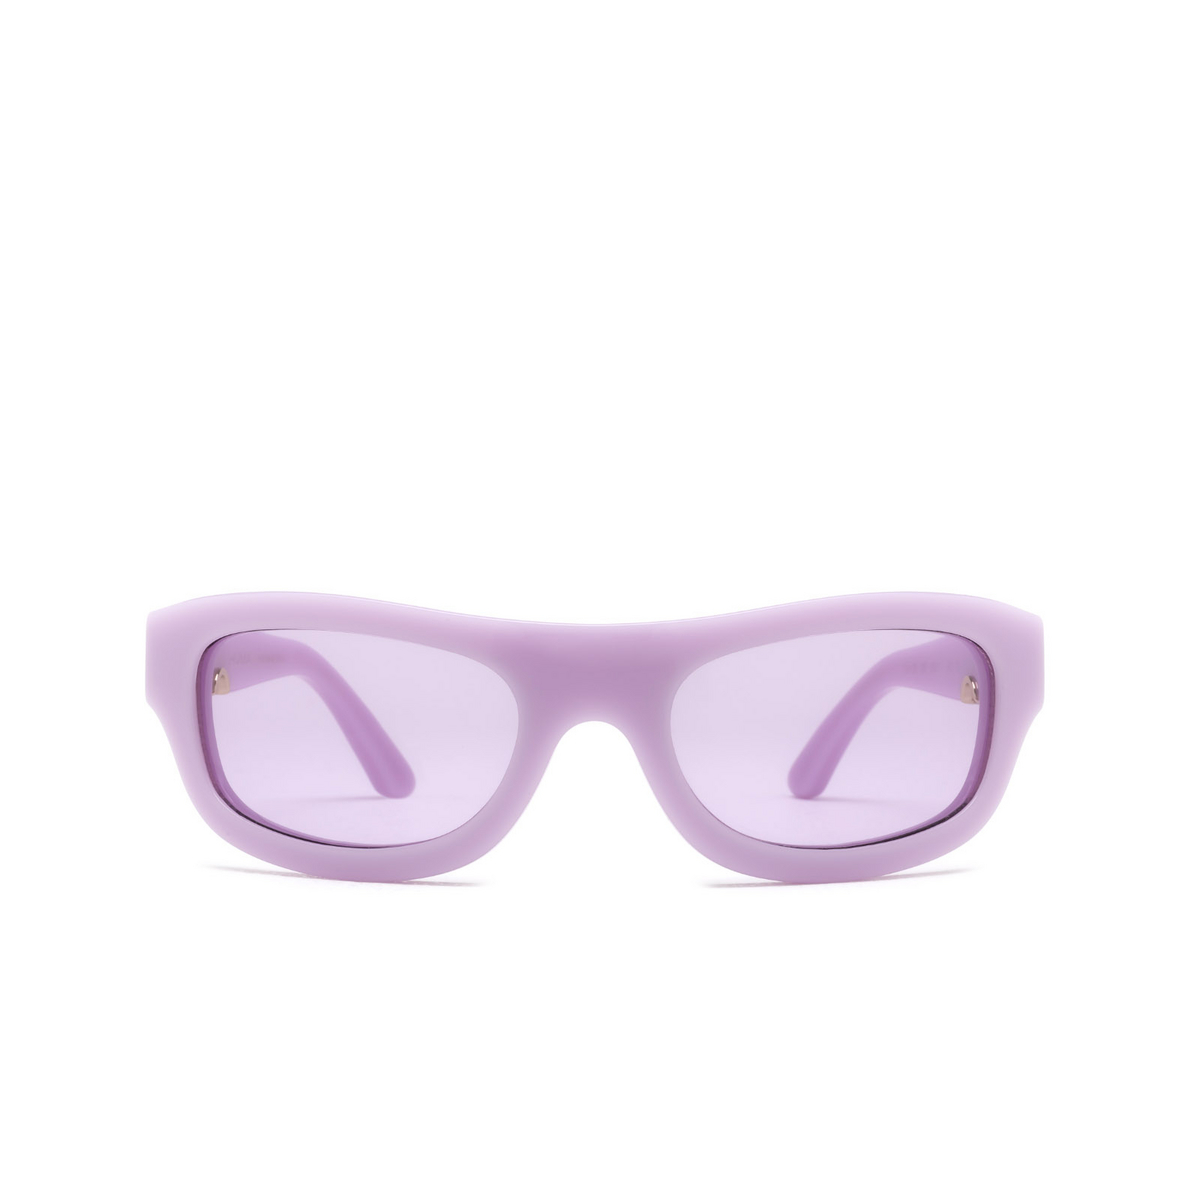 Huma ALI Sunglasses 10 Violet - front view